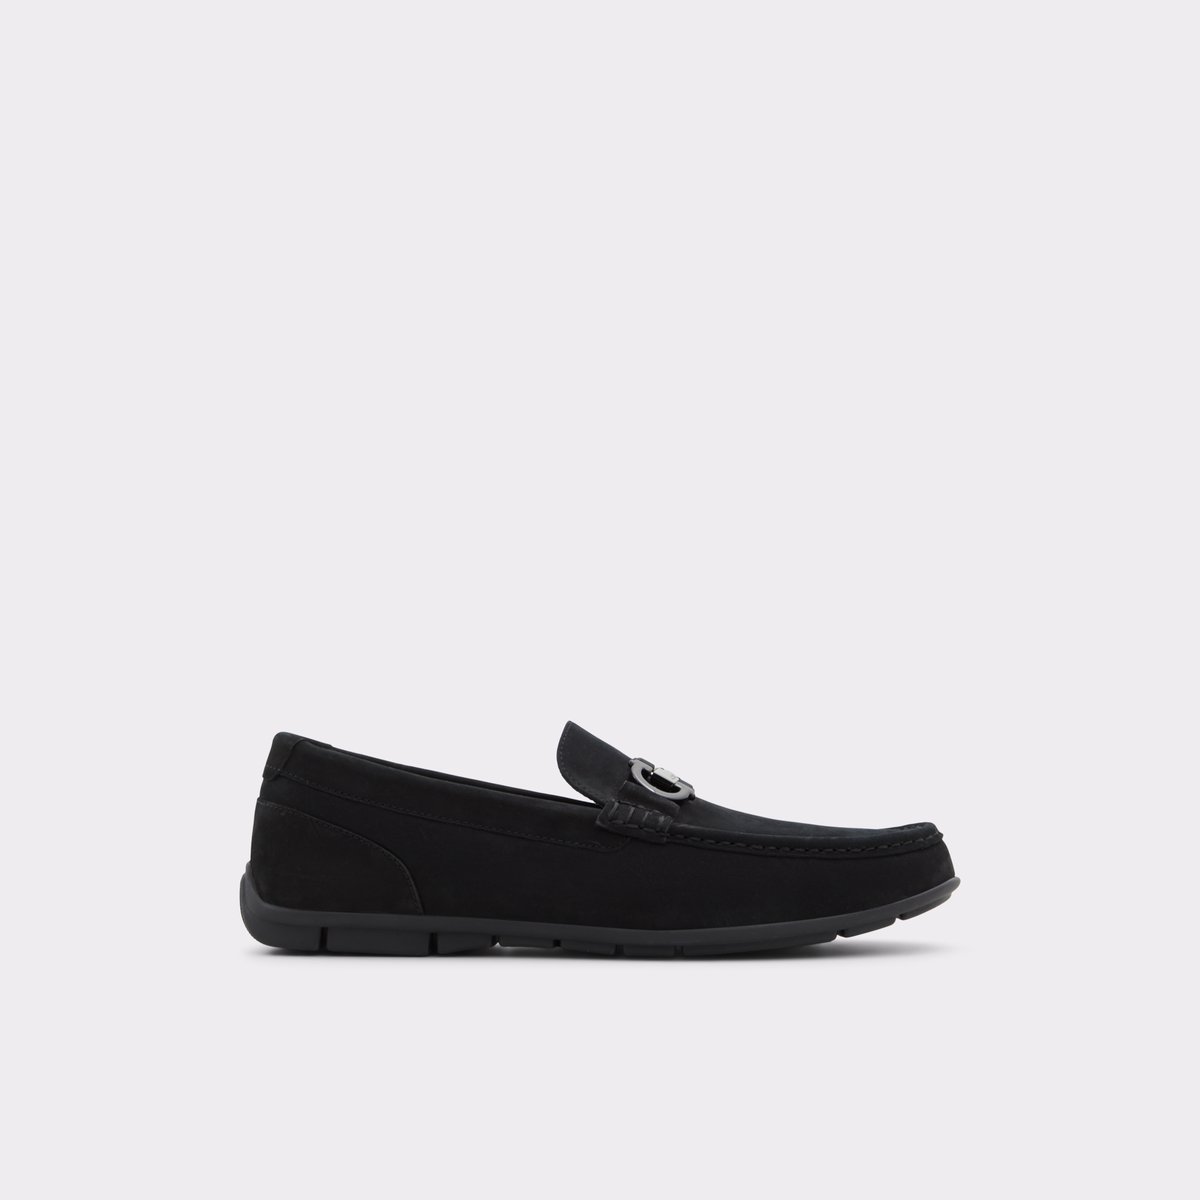 Orlovoflex Black Leather Nubuck Men's Casual Shoes | ALDO Canada